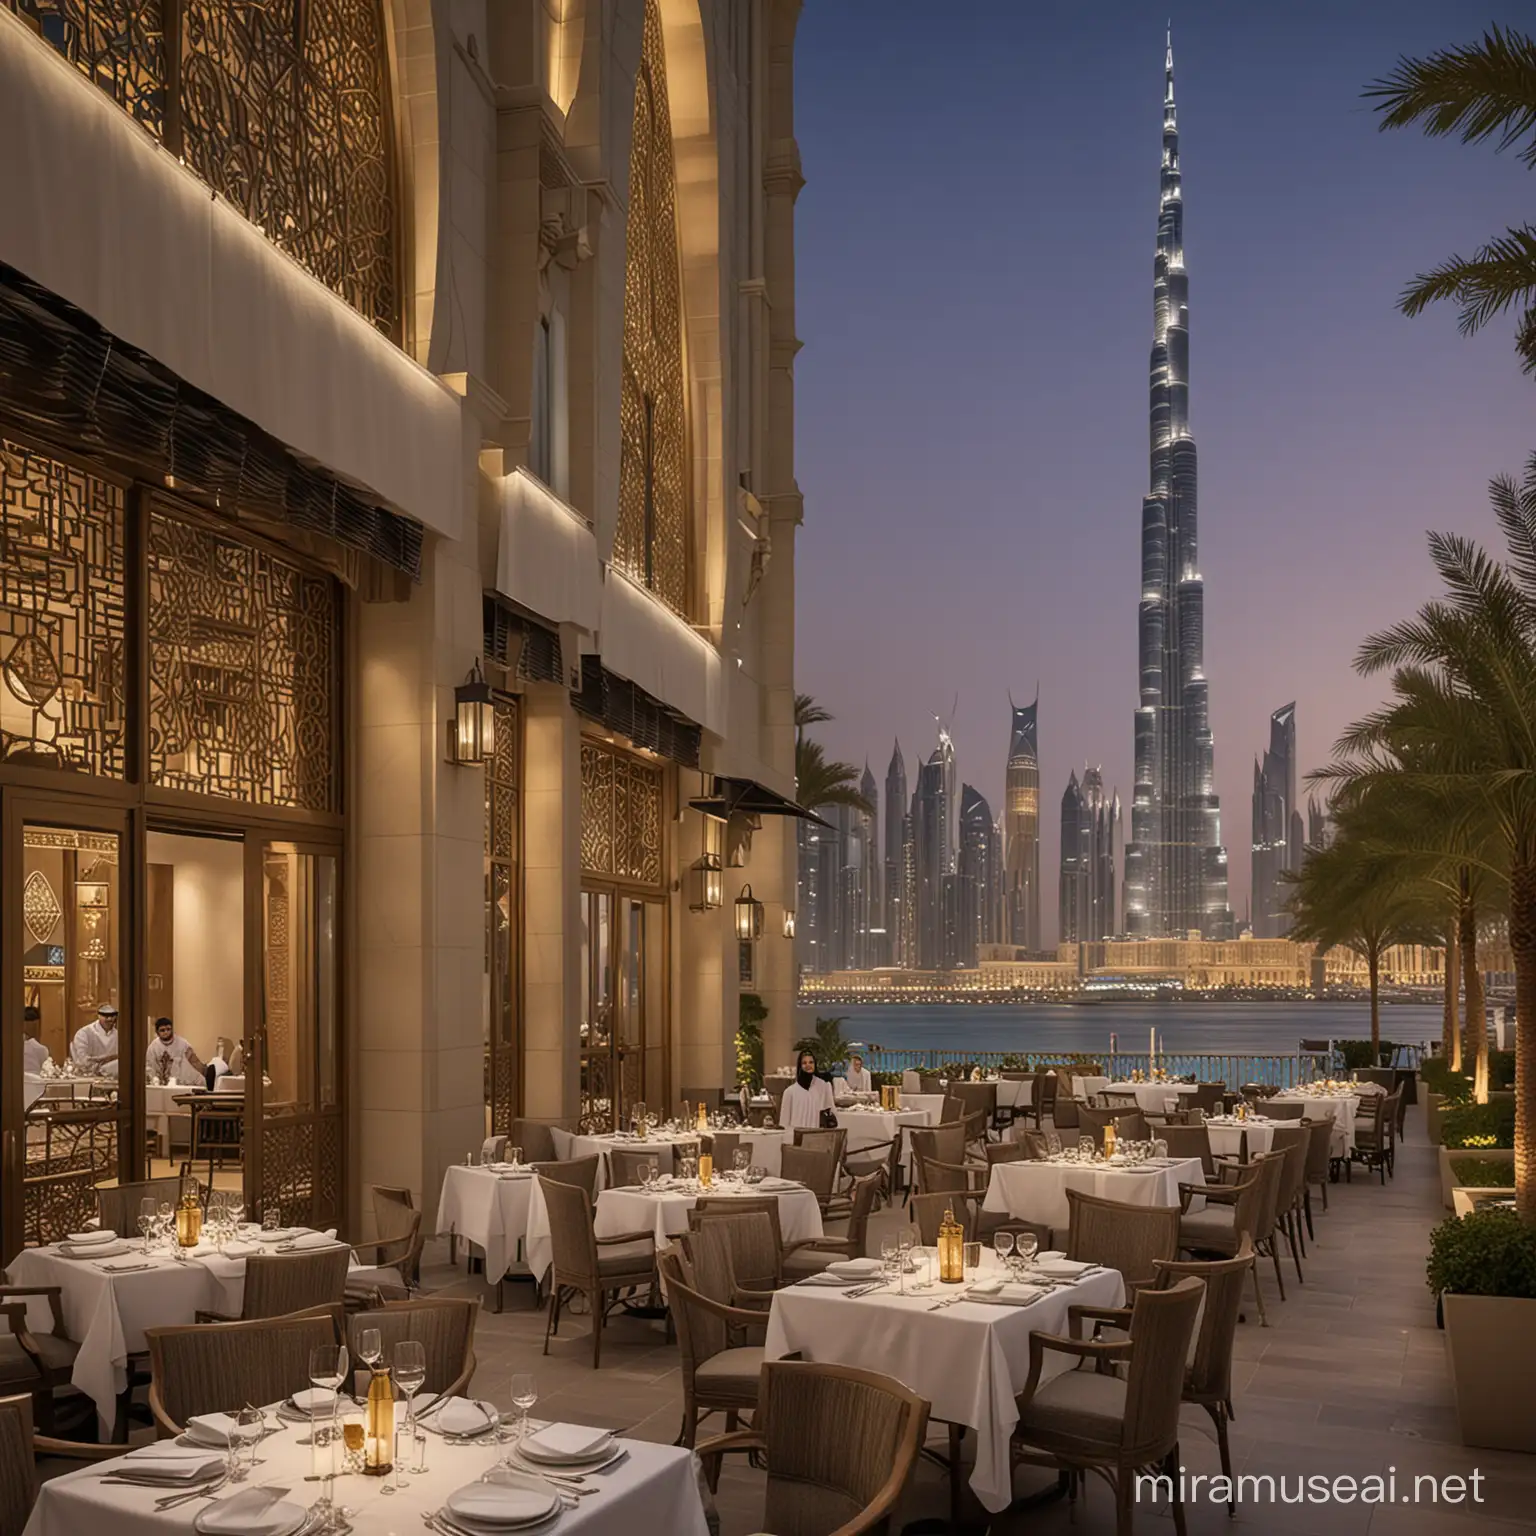 Elegant Arabian Restaurant with Iconic Dubai Skyline